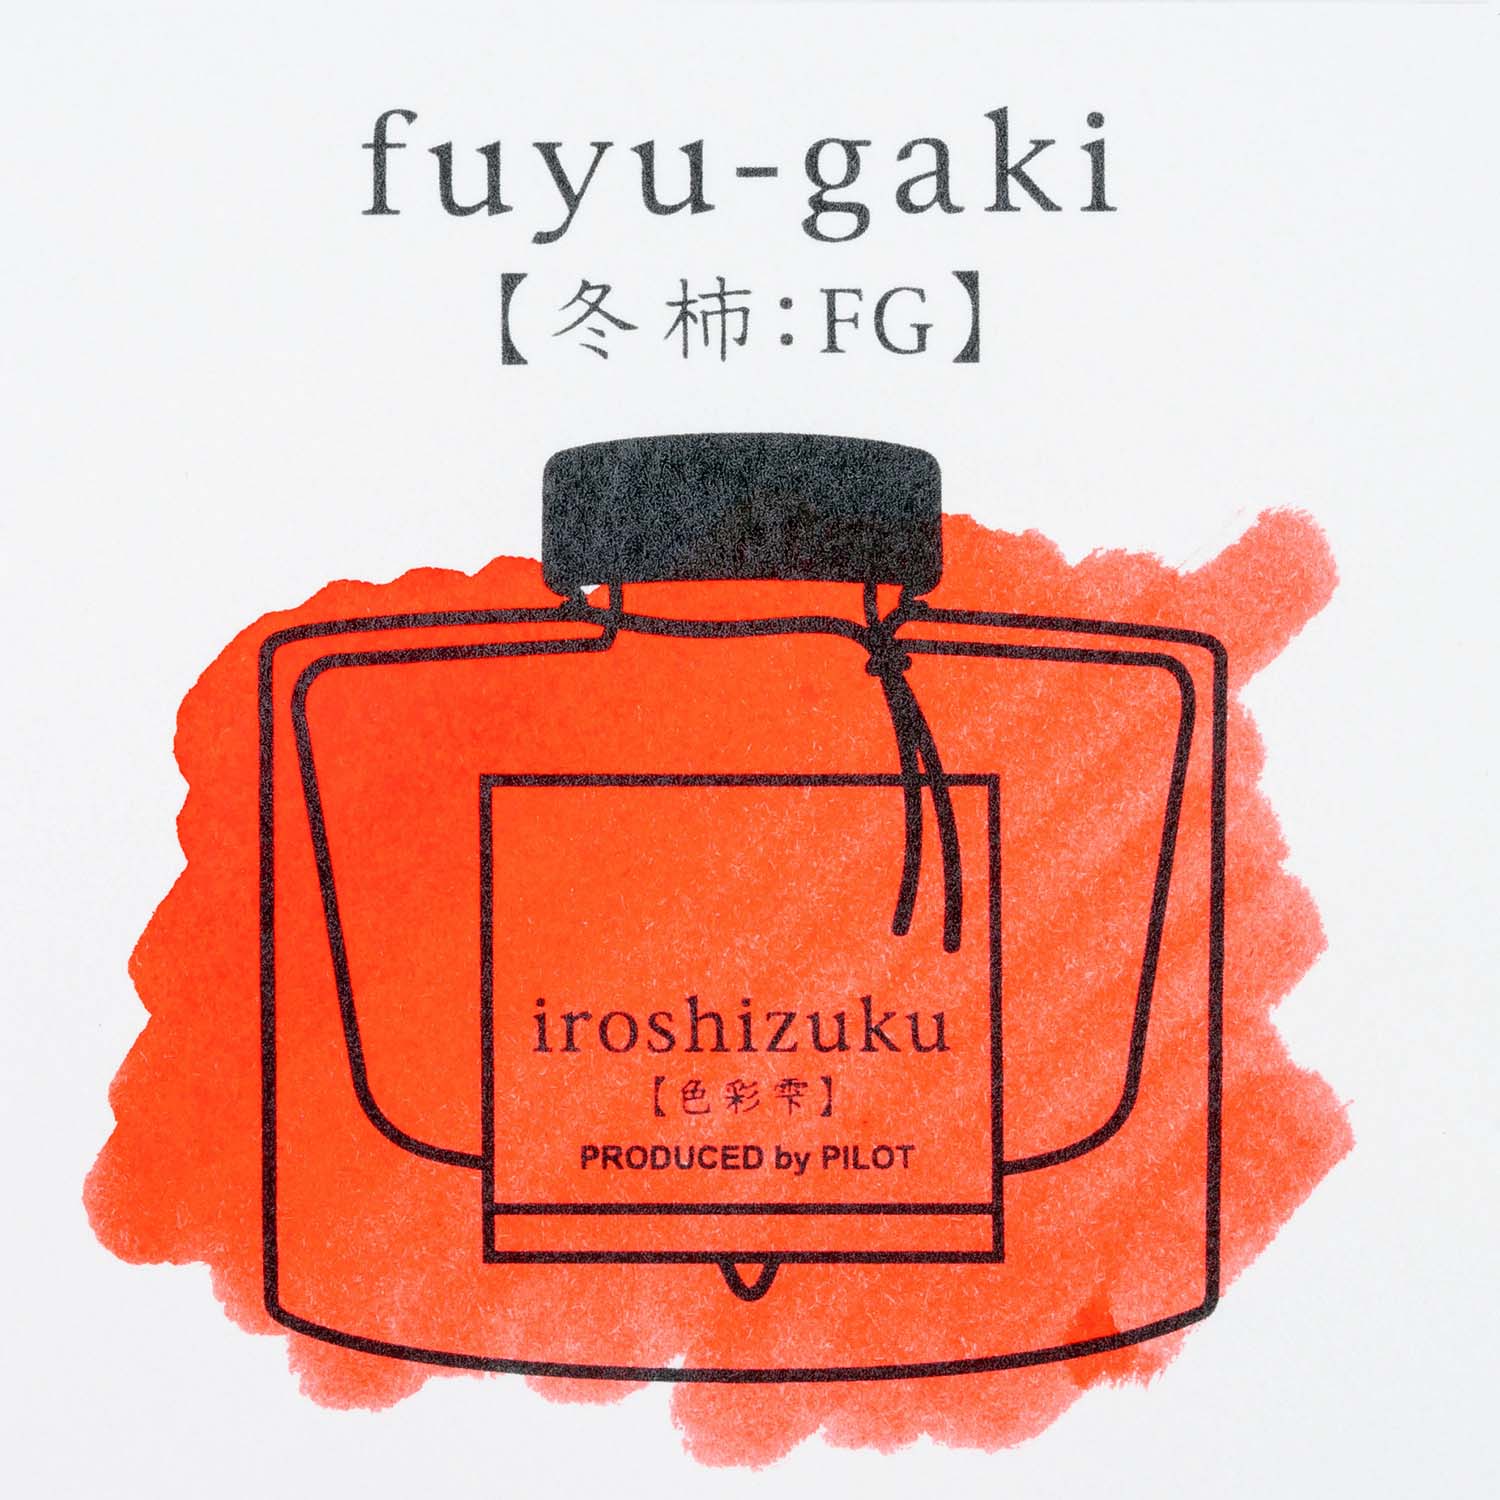 Pilot Iroshizuku Fountain Pen Ink - Fuyu-gaki (Winter Persimmon) red orange sample